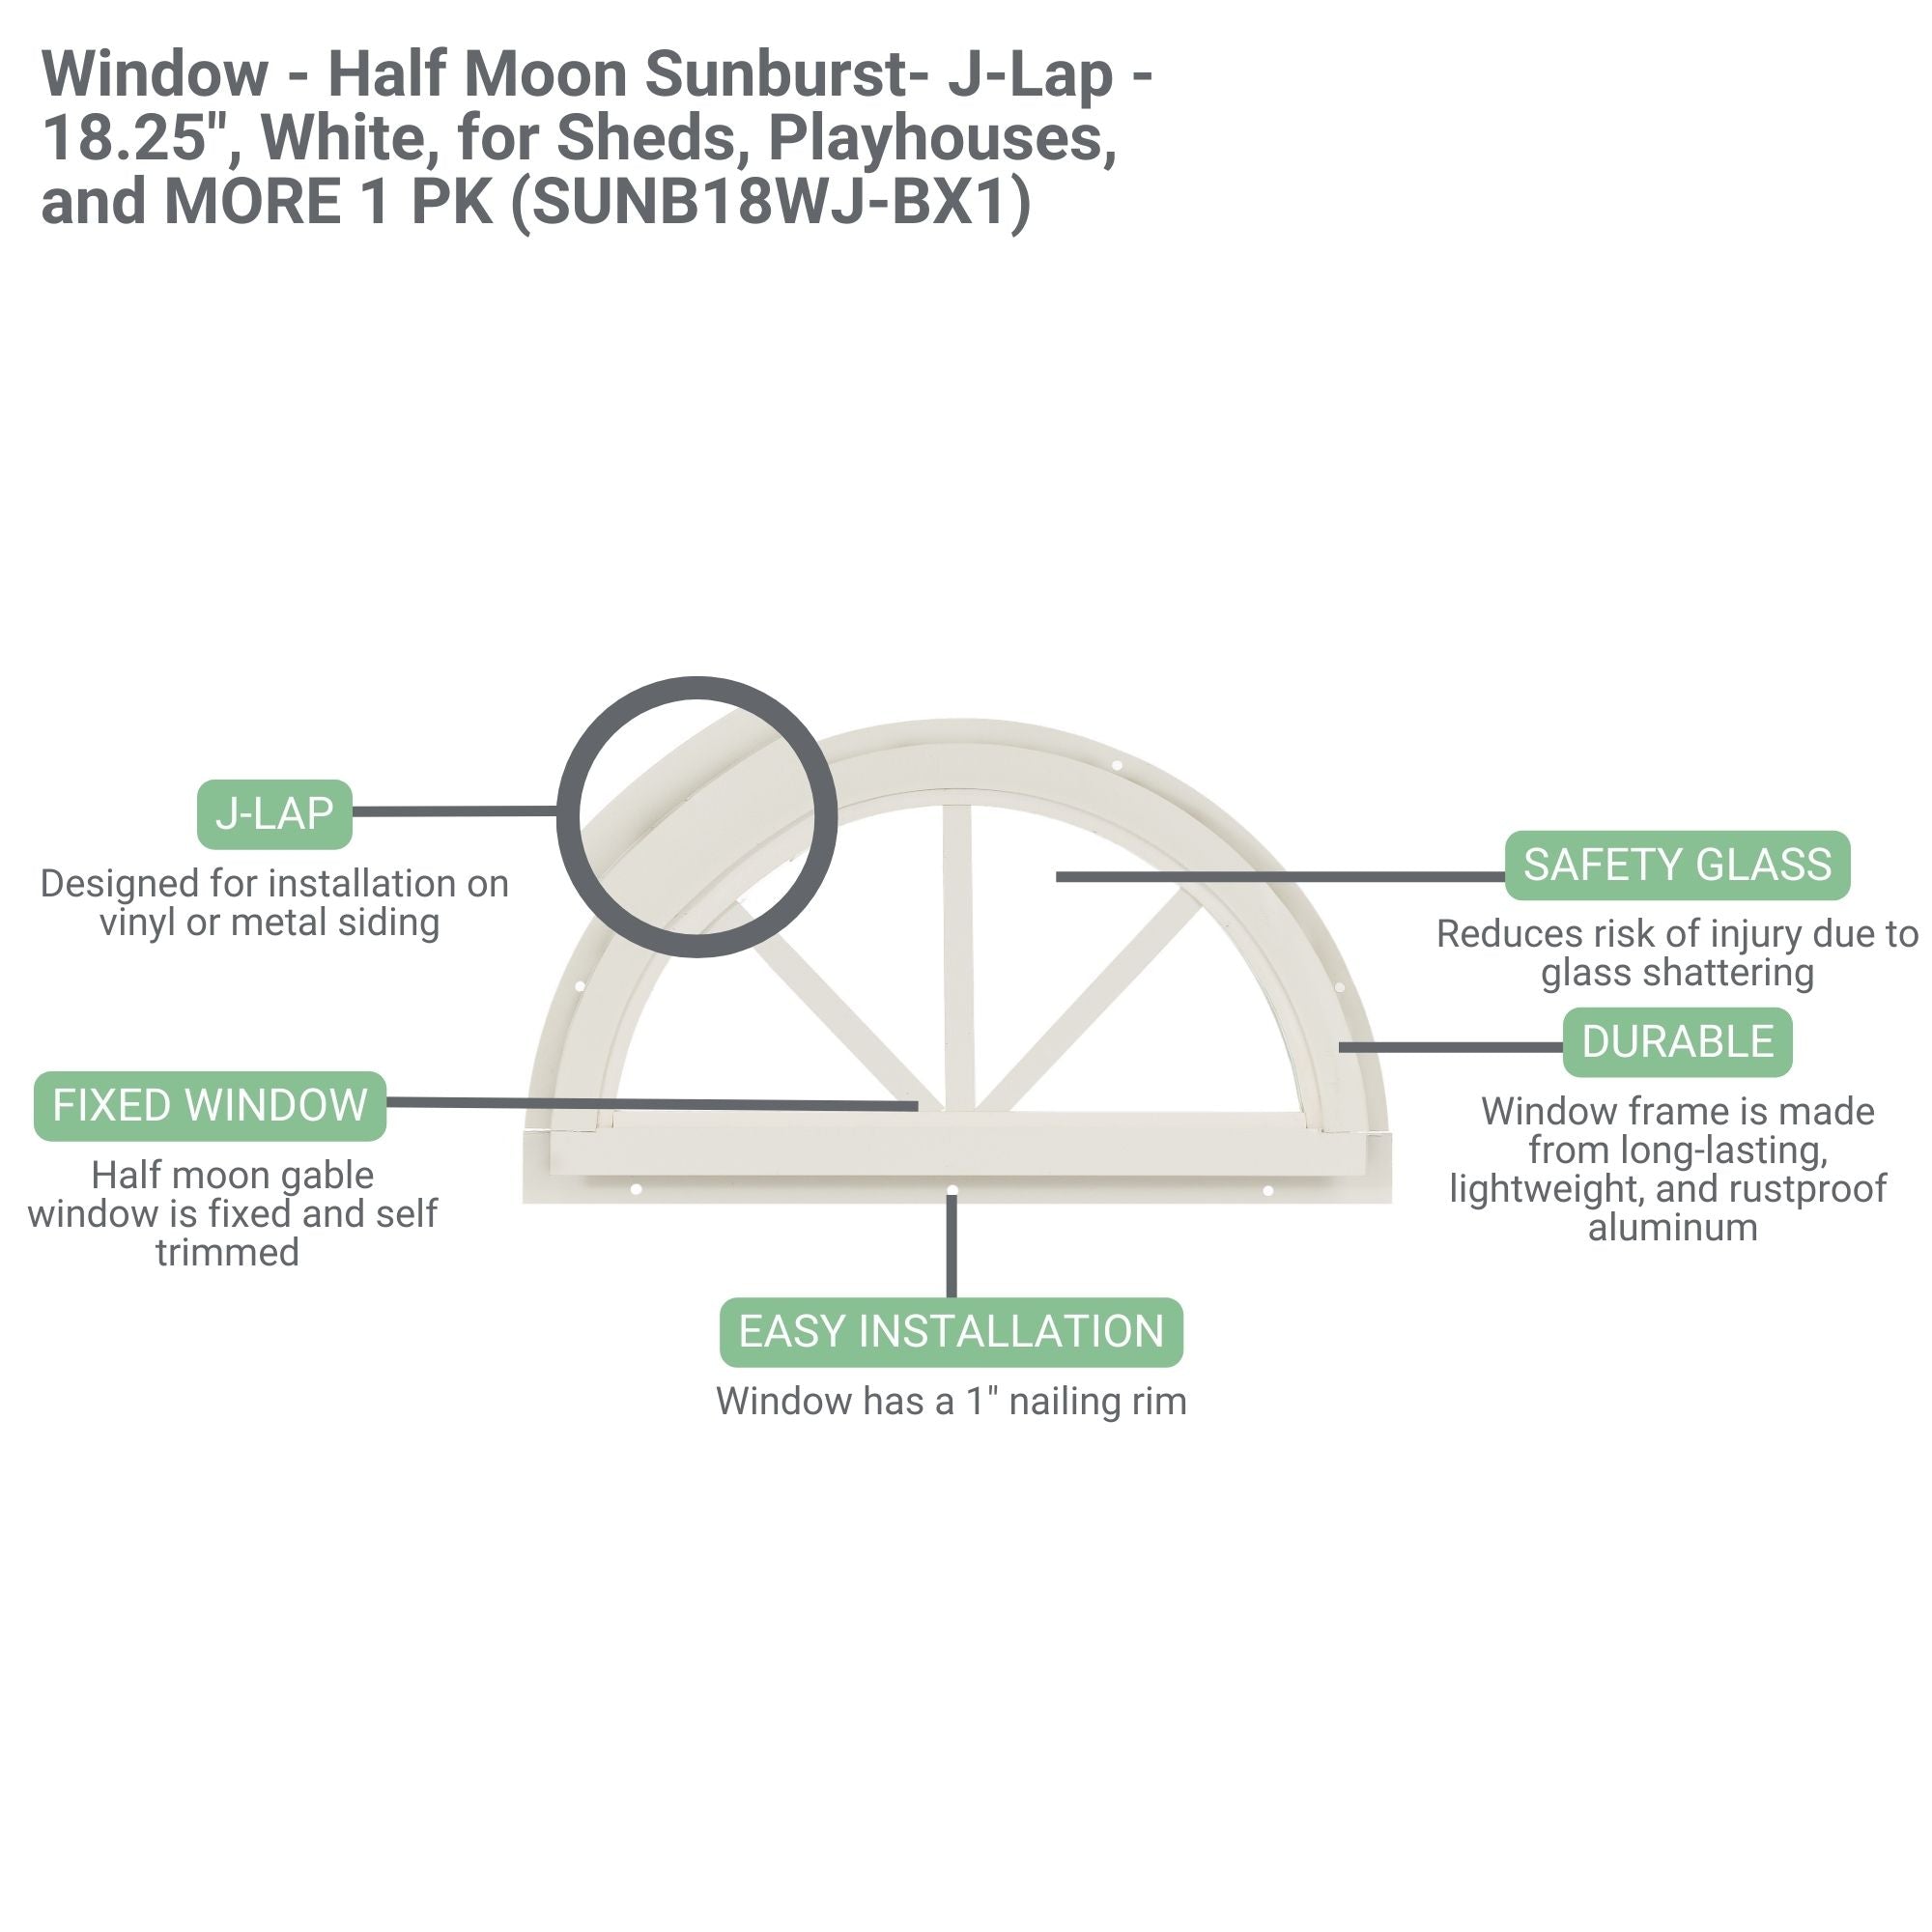 18.25" Half Moon Sunburst J-Lap Shed Window